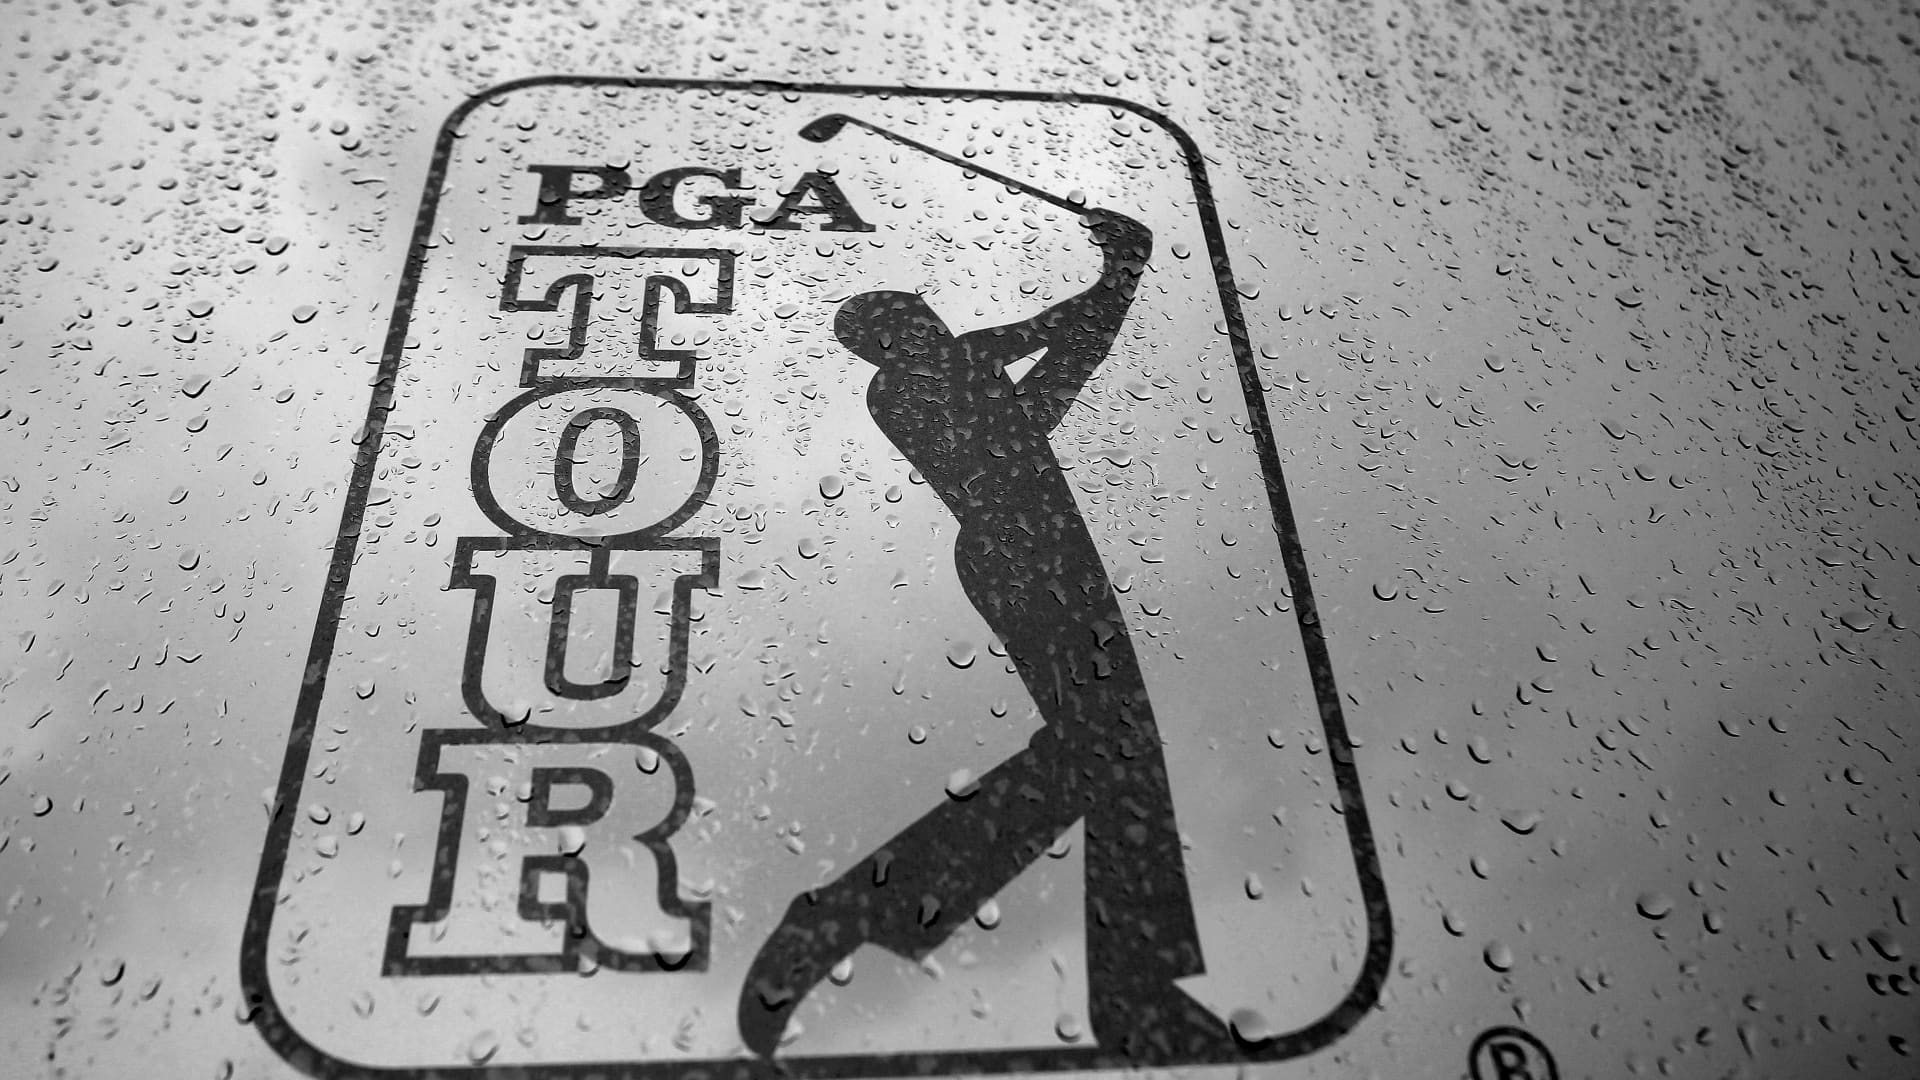 PGA Tour, LIV Golf working to extend merger deadline into 2024